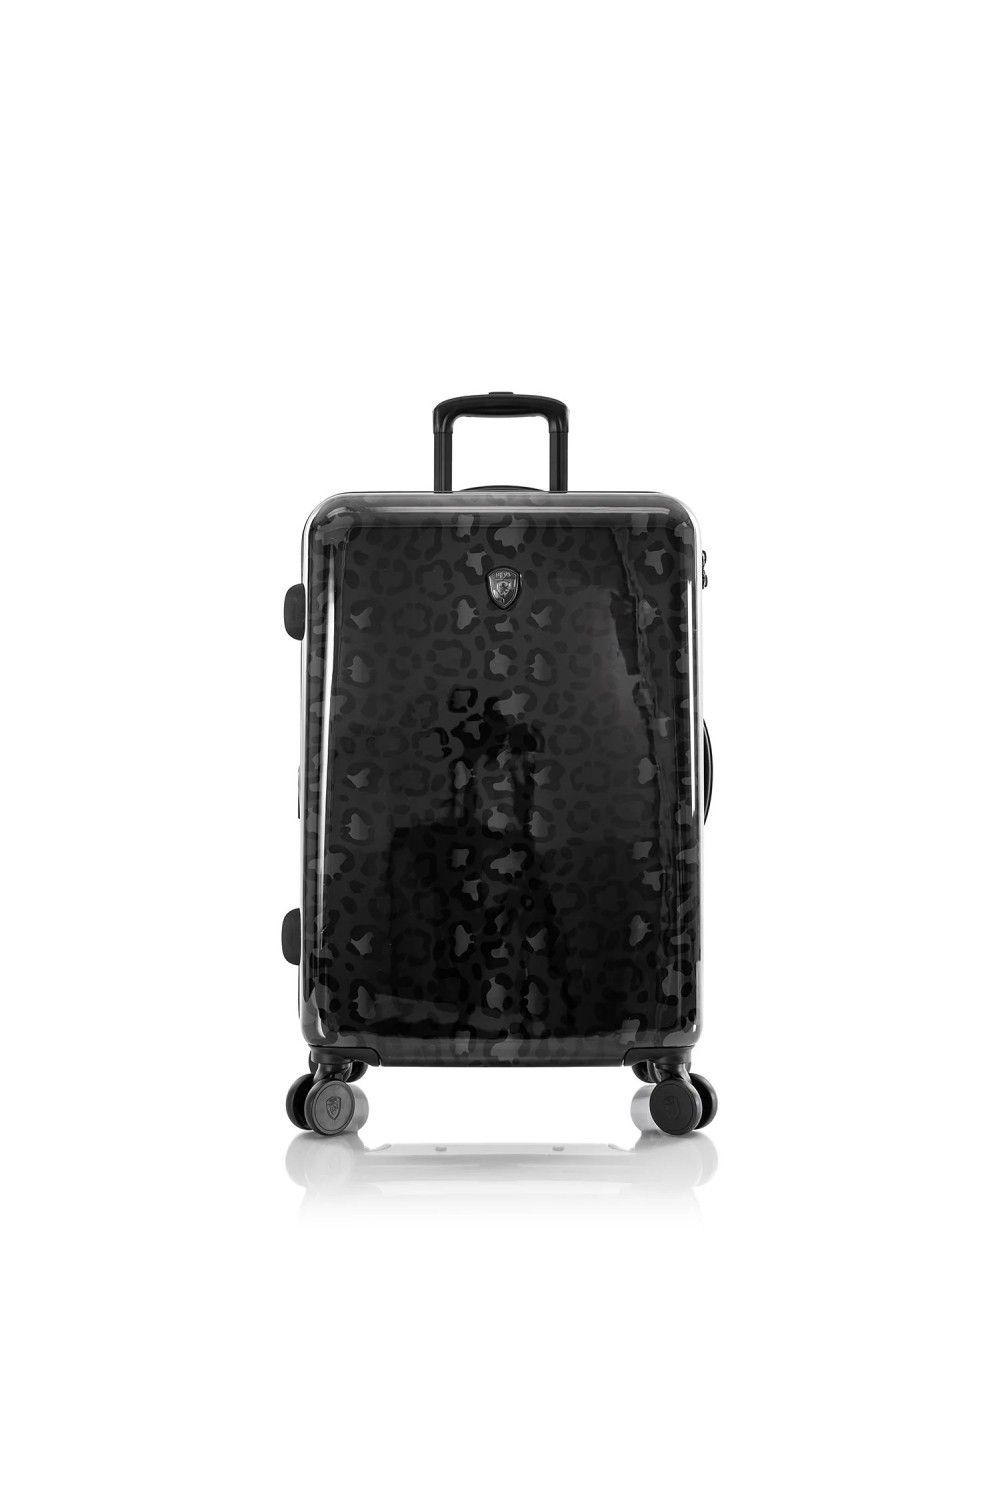 Suitcase Heys Black Leopard 4 Rad Medium 66cm expandable